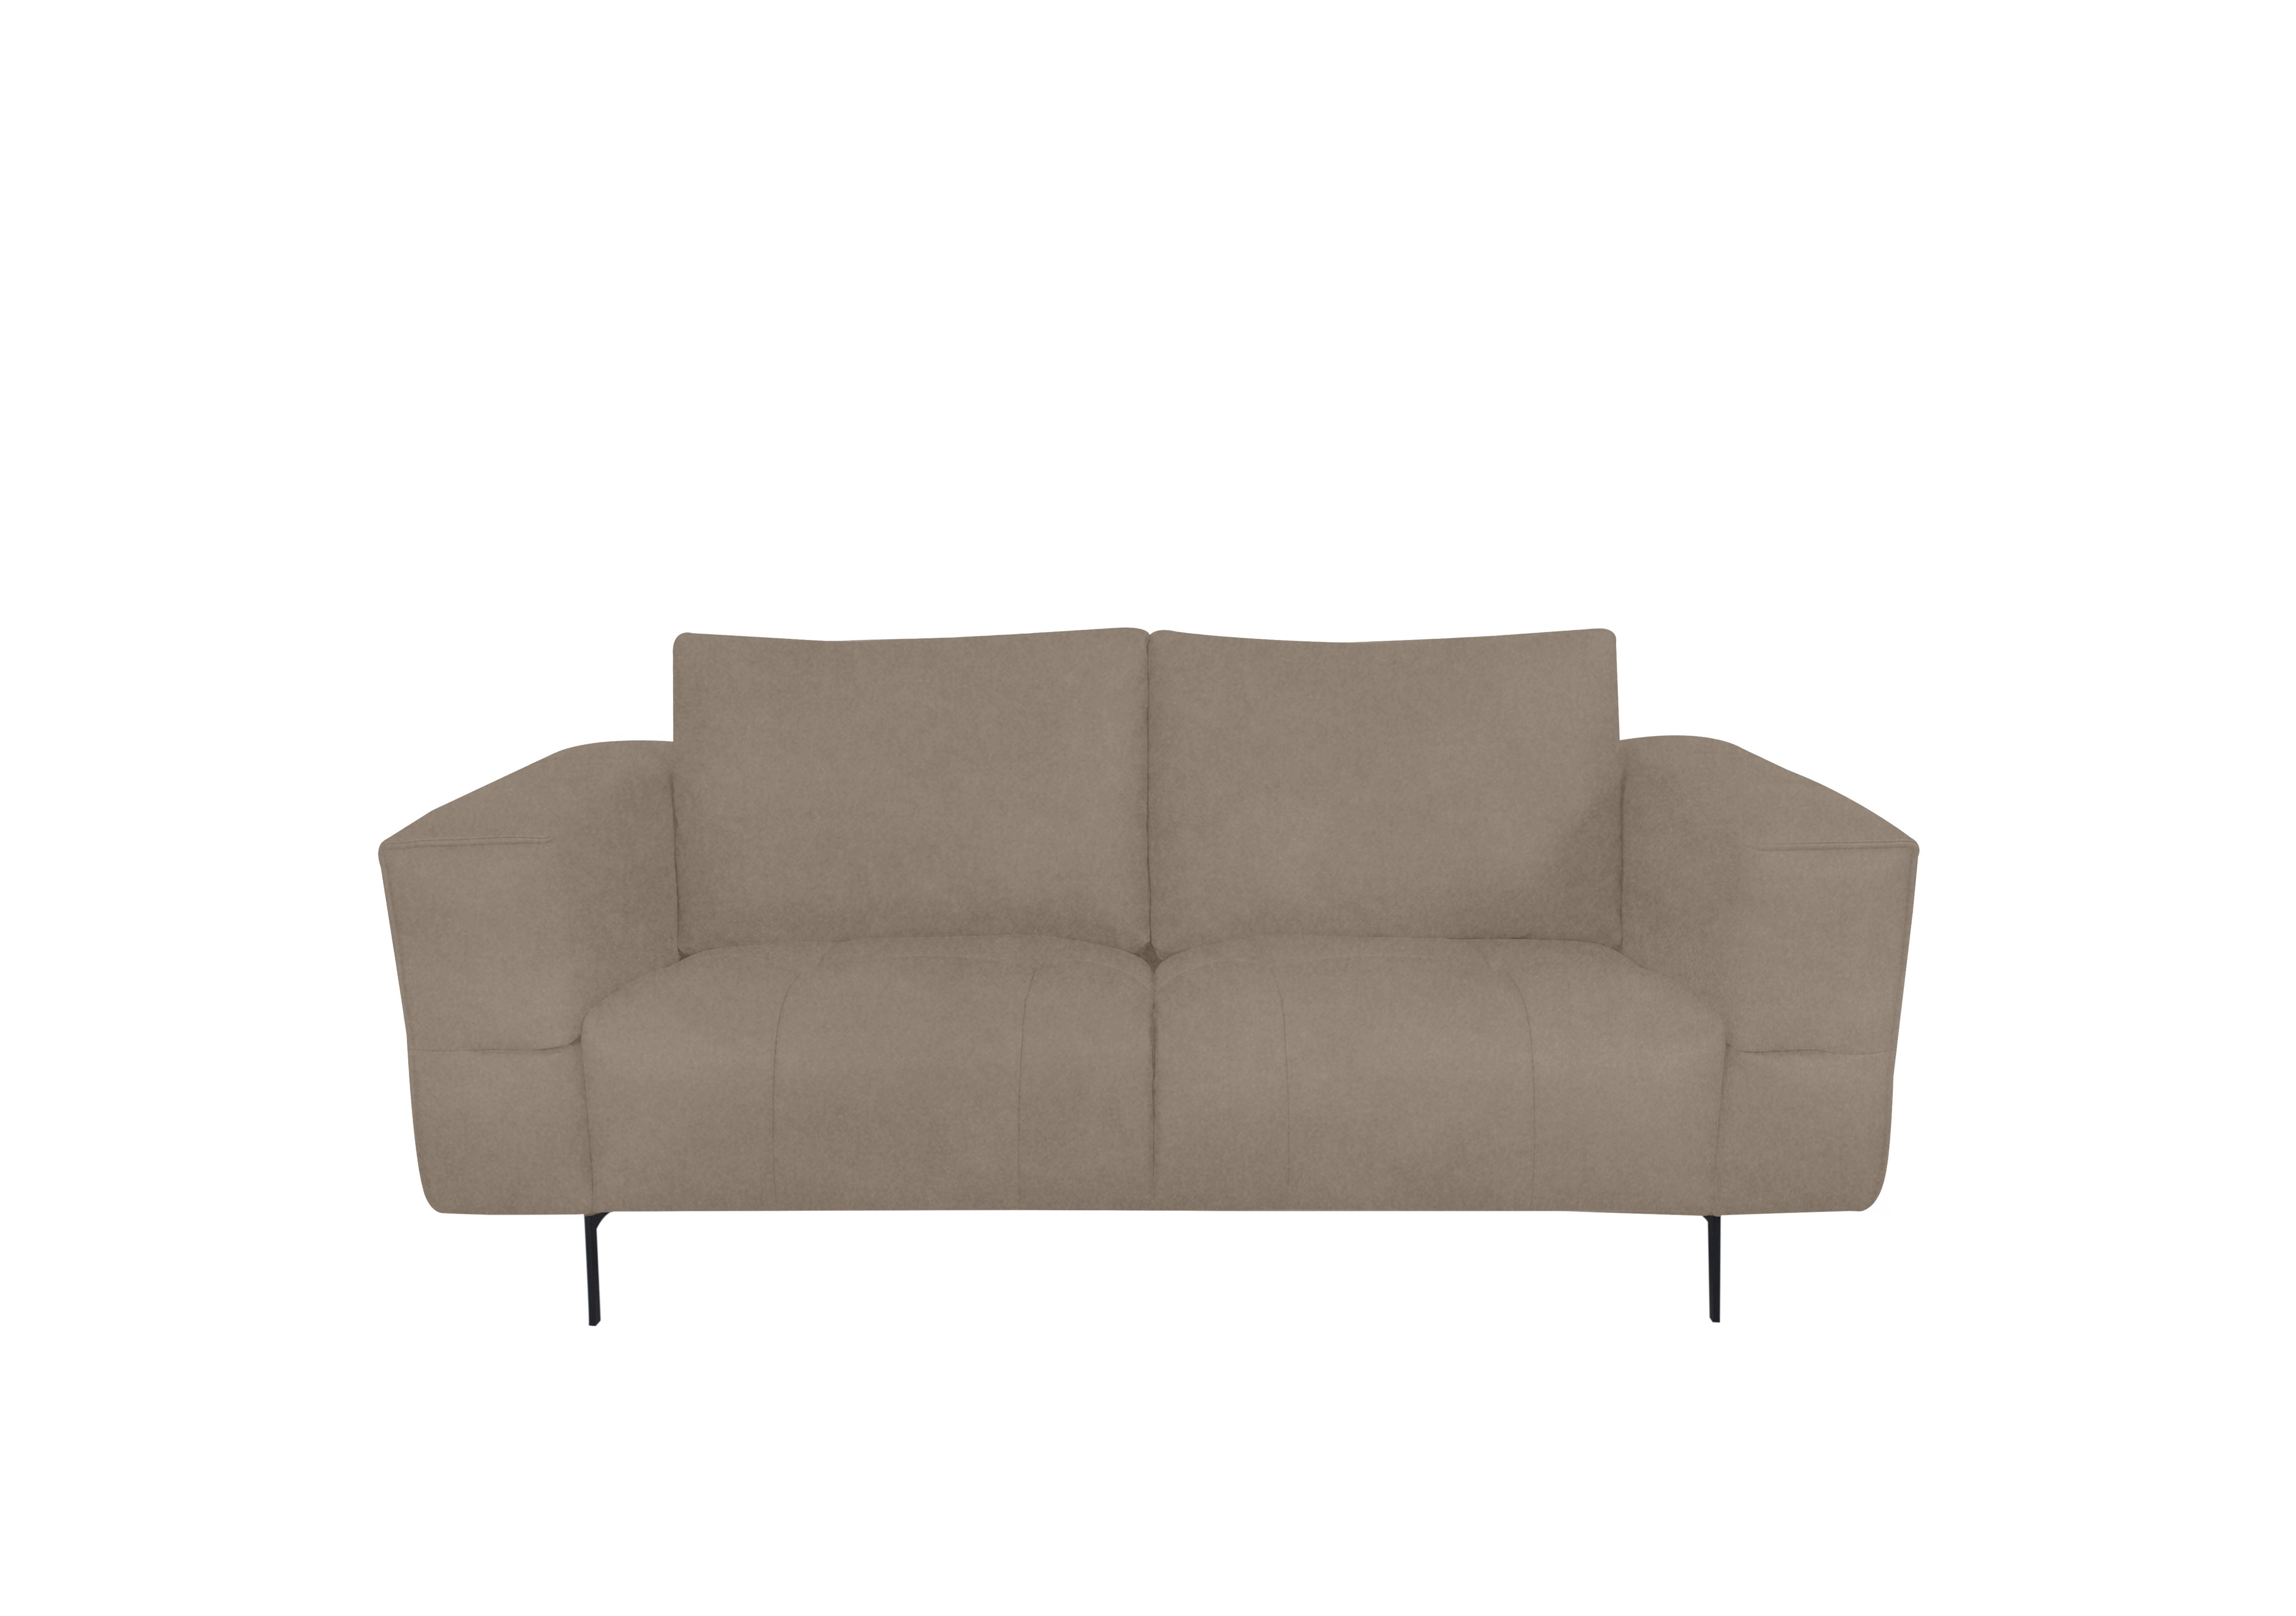 Lawson 2 Seater Fabric Sofa in Fab-Meg-R32 Light Khaki on Furniture Village